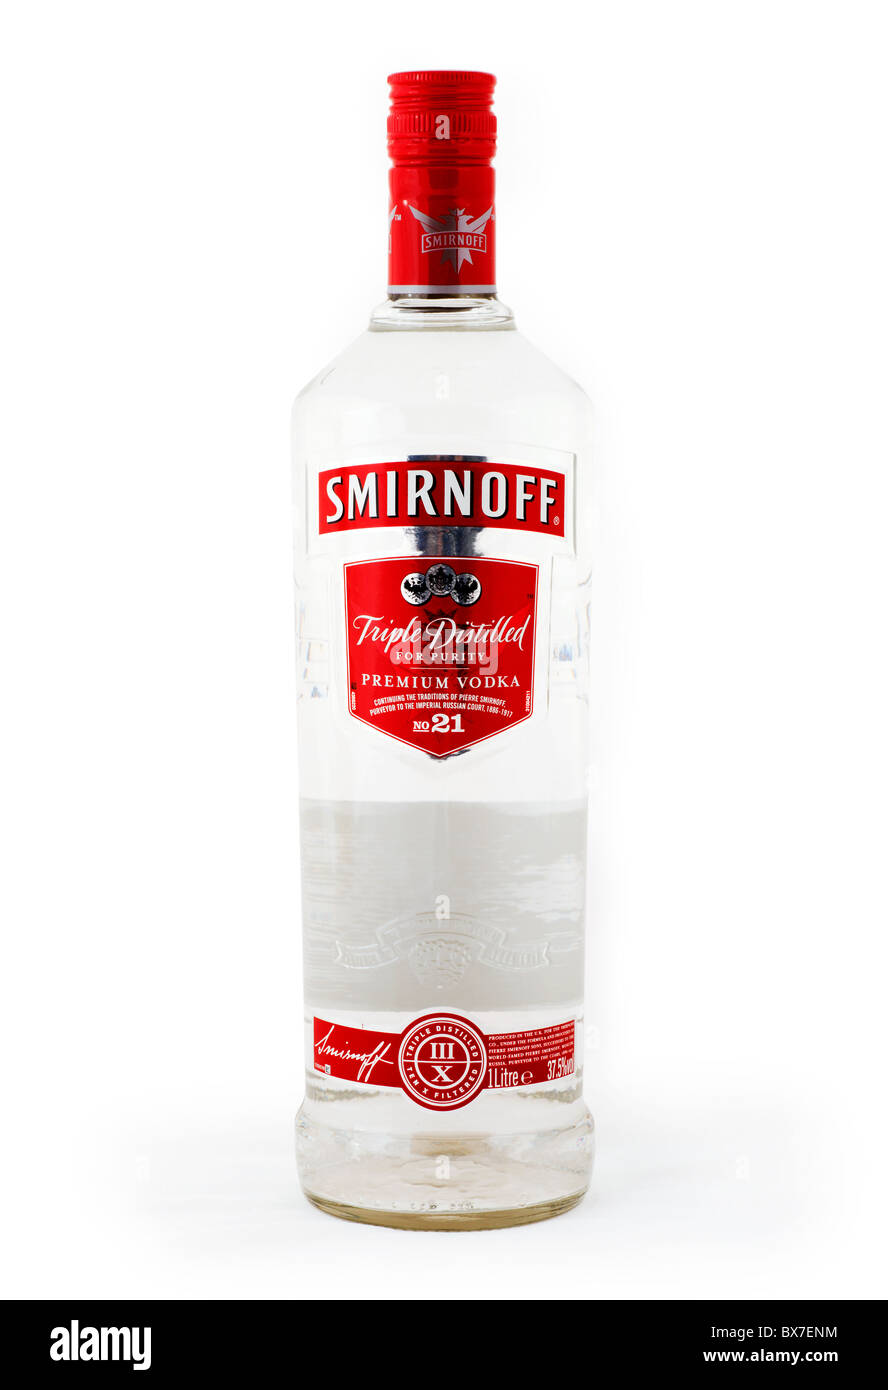 Bottle of Smirnoff premium vodka Stock Photo